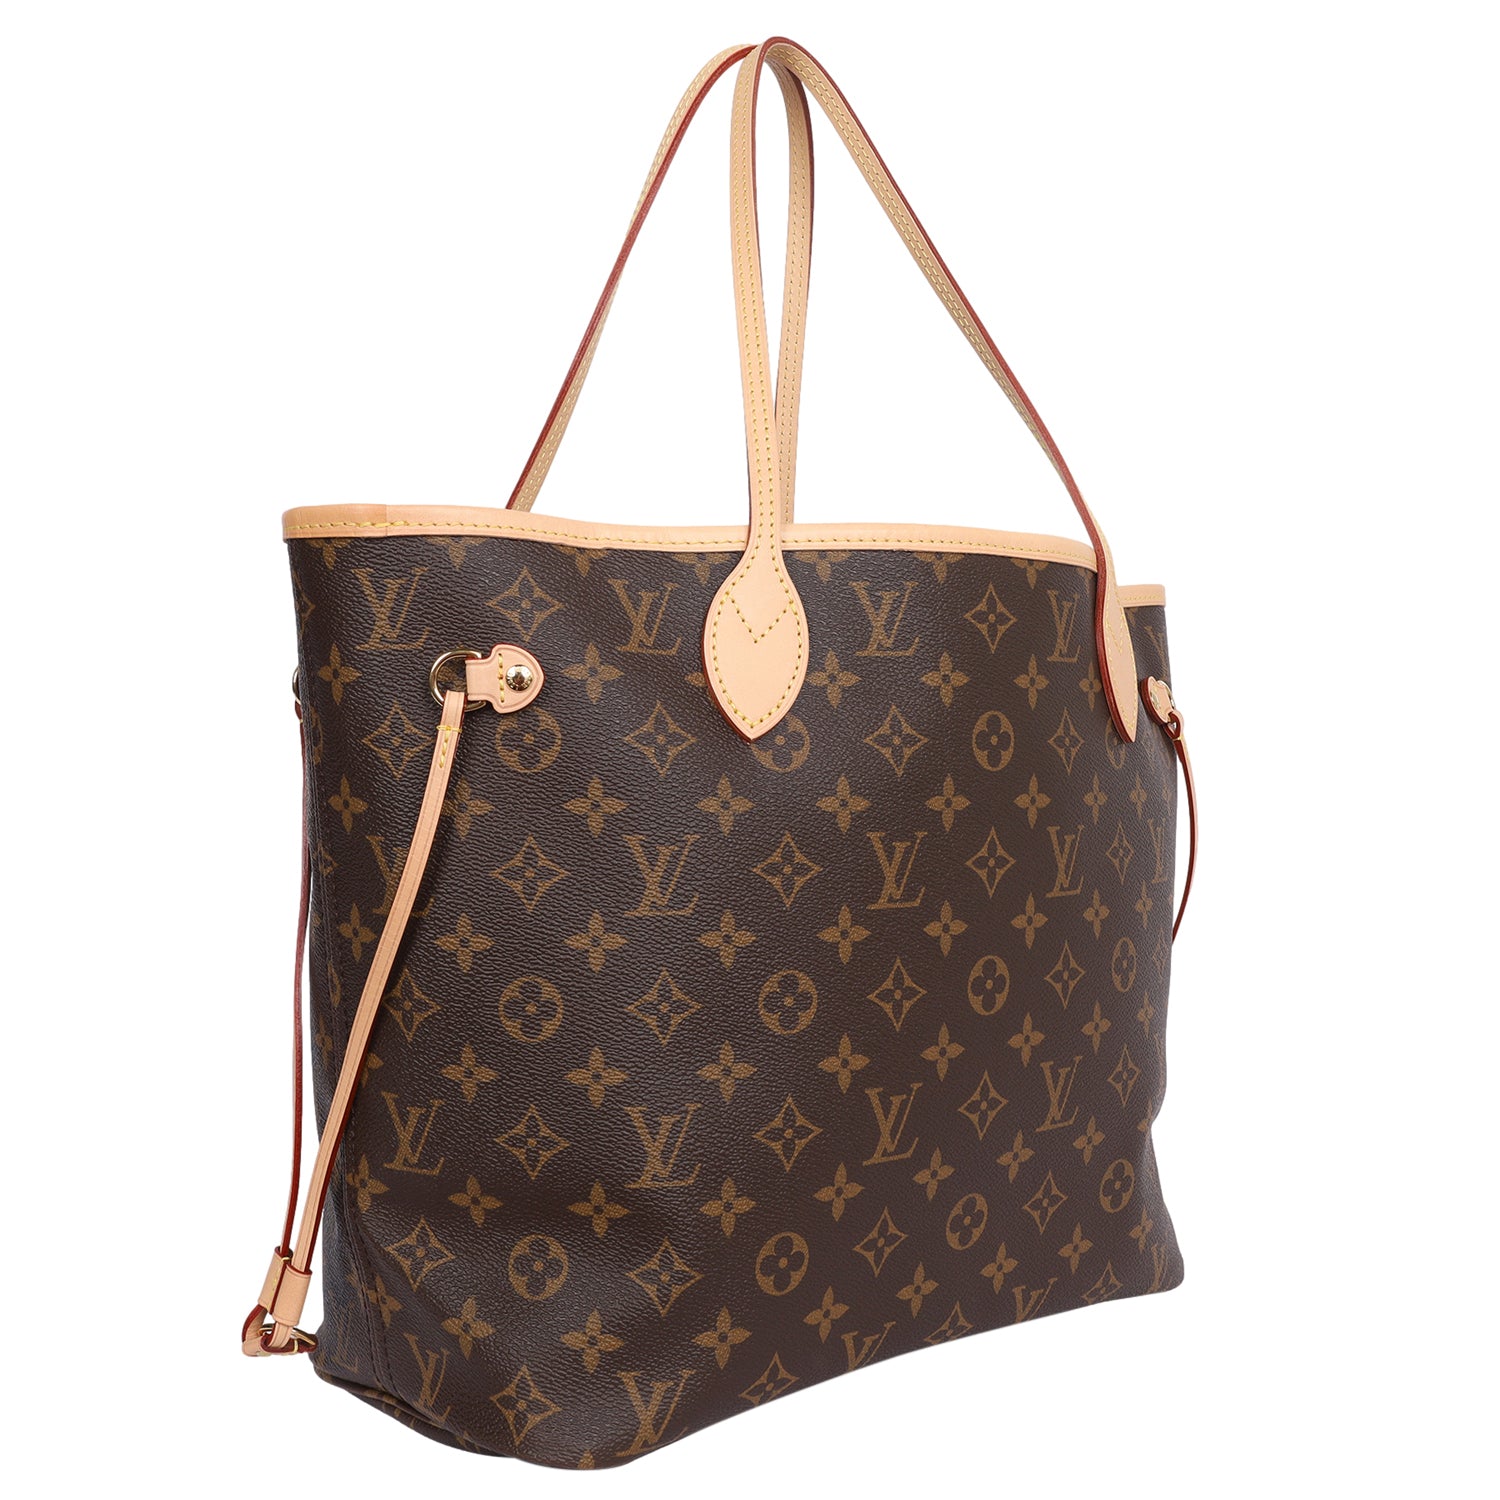 True-to-ORIGINAL] Louis Vuitton Neverfull MM Tote Bag Monogram